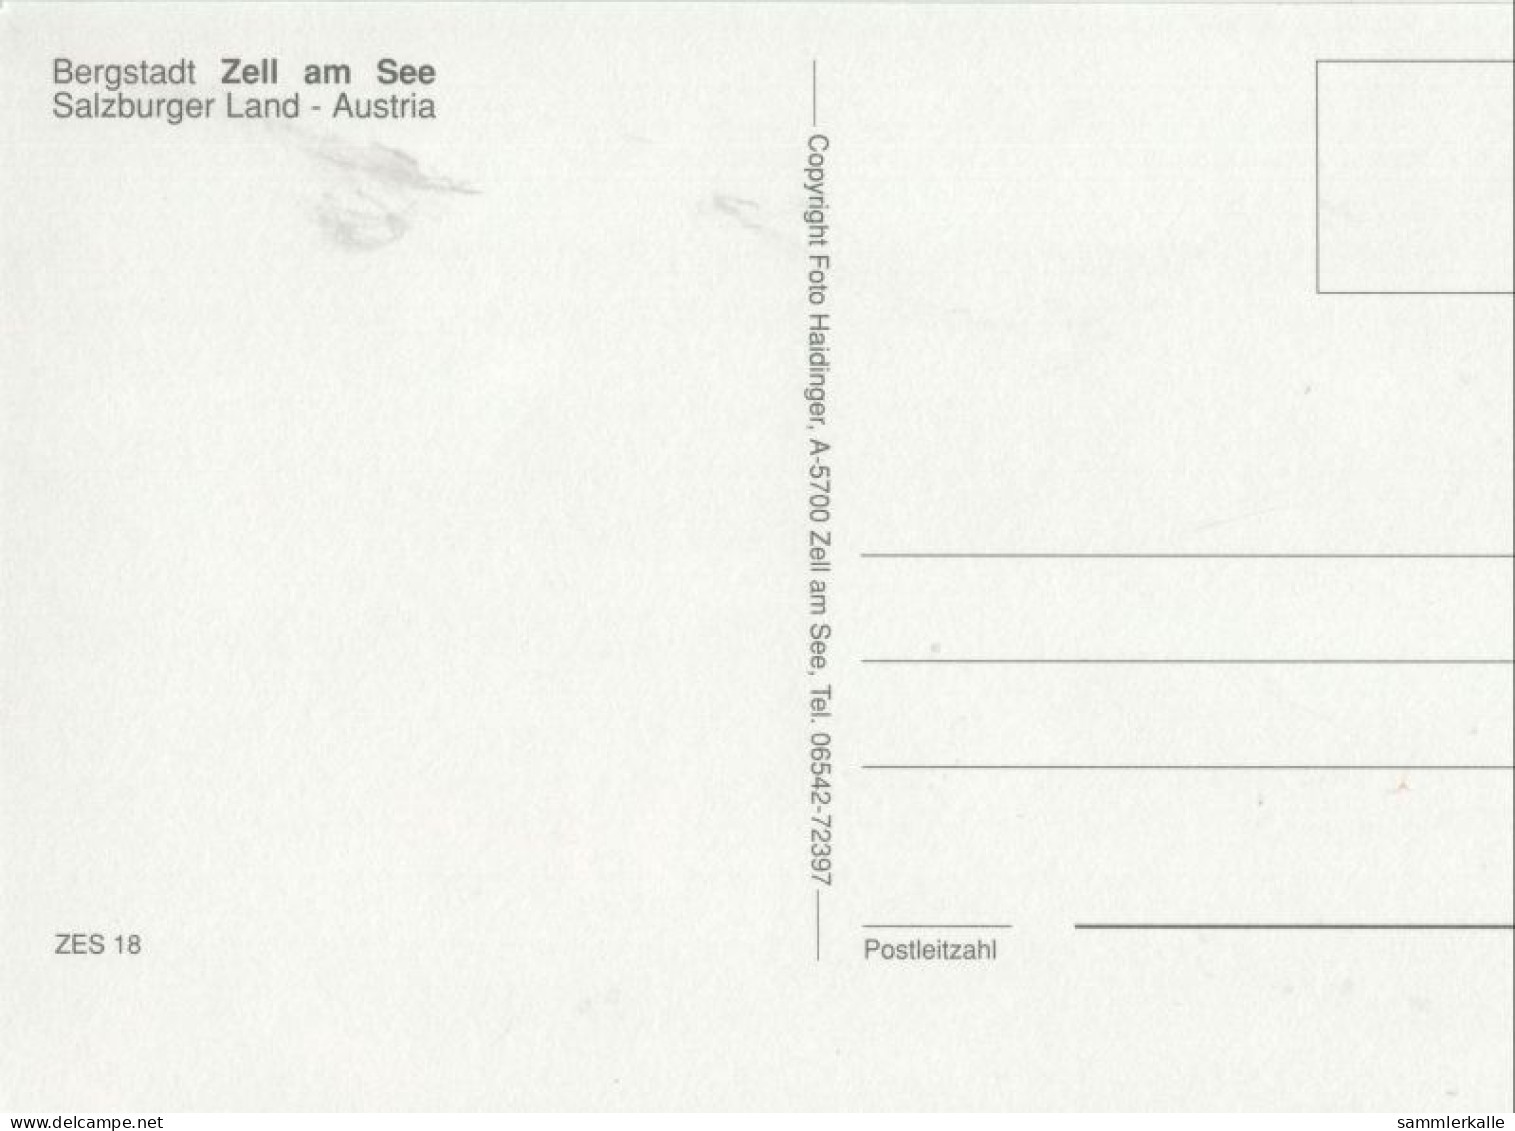 135736 - Zell Am See - Österreich - 5 Bilder - Zell Am See